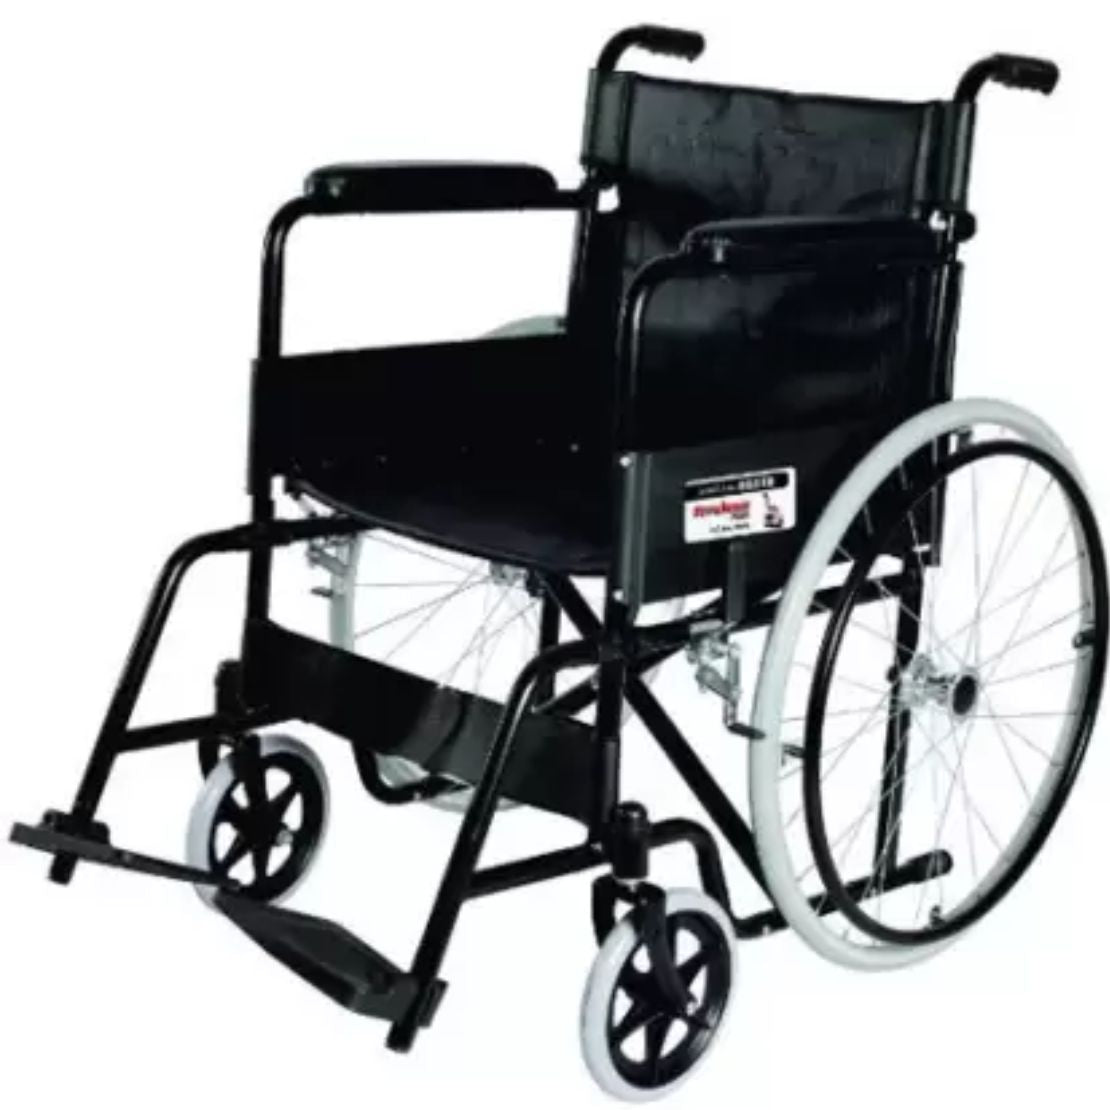 Vissco Rodeo Plus Wheelchair with Spoke Wheels